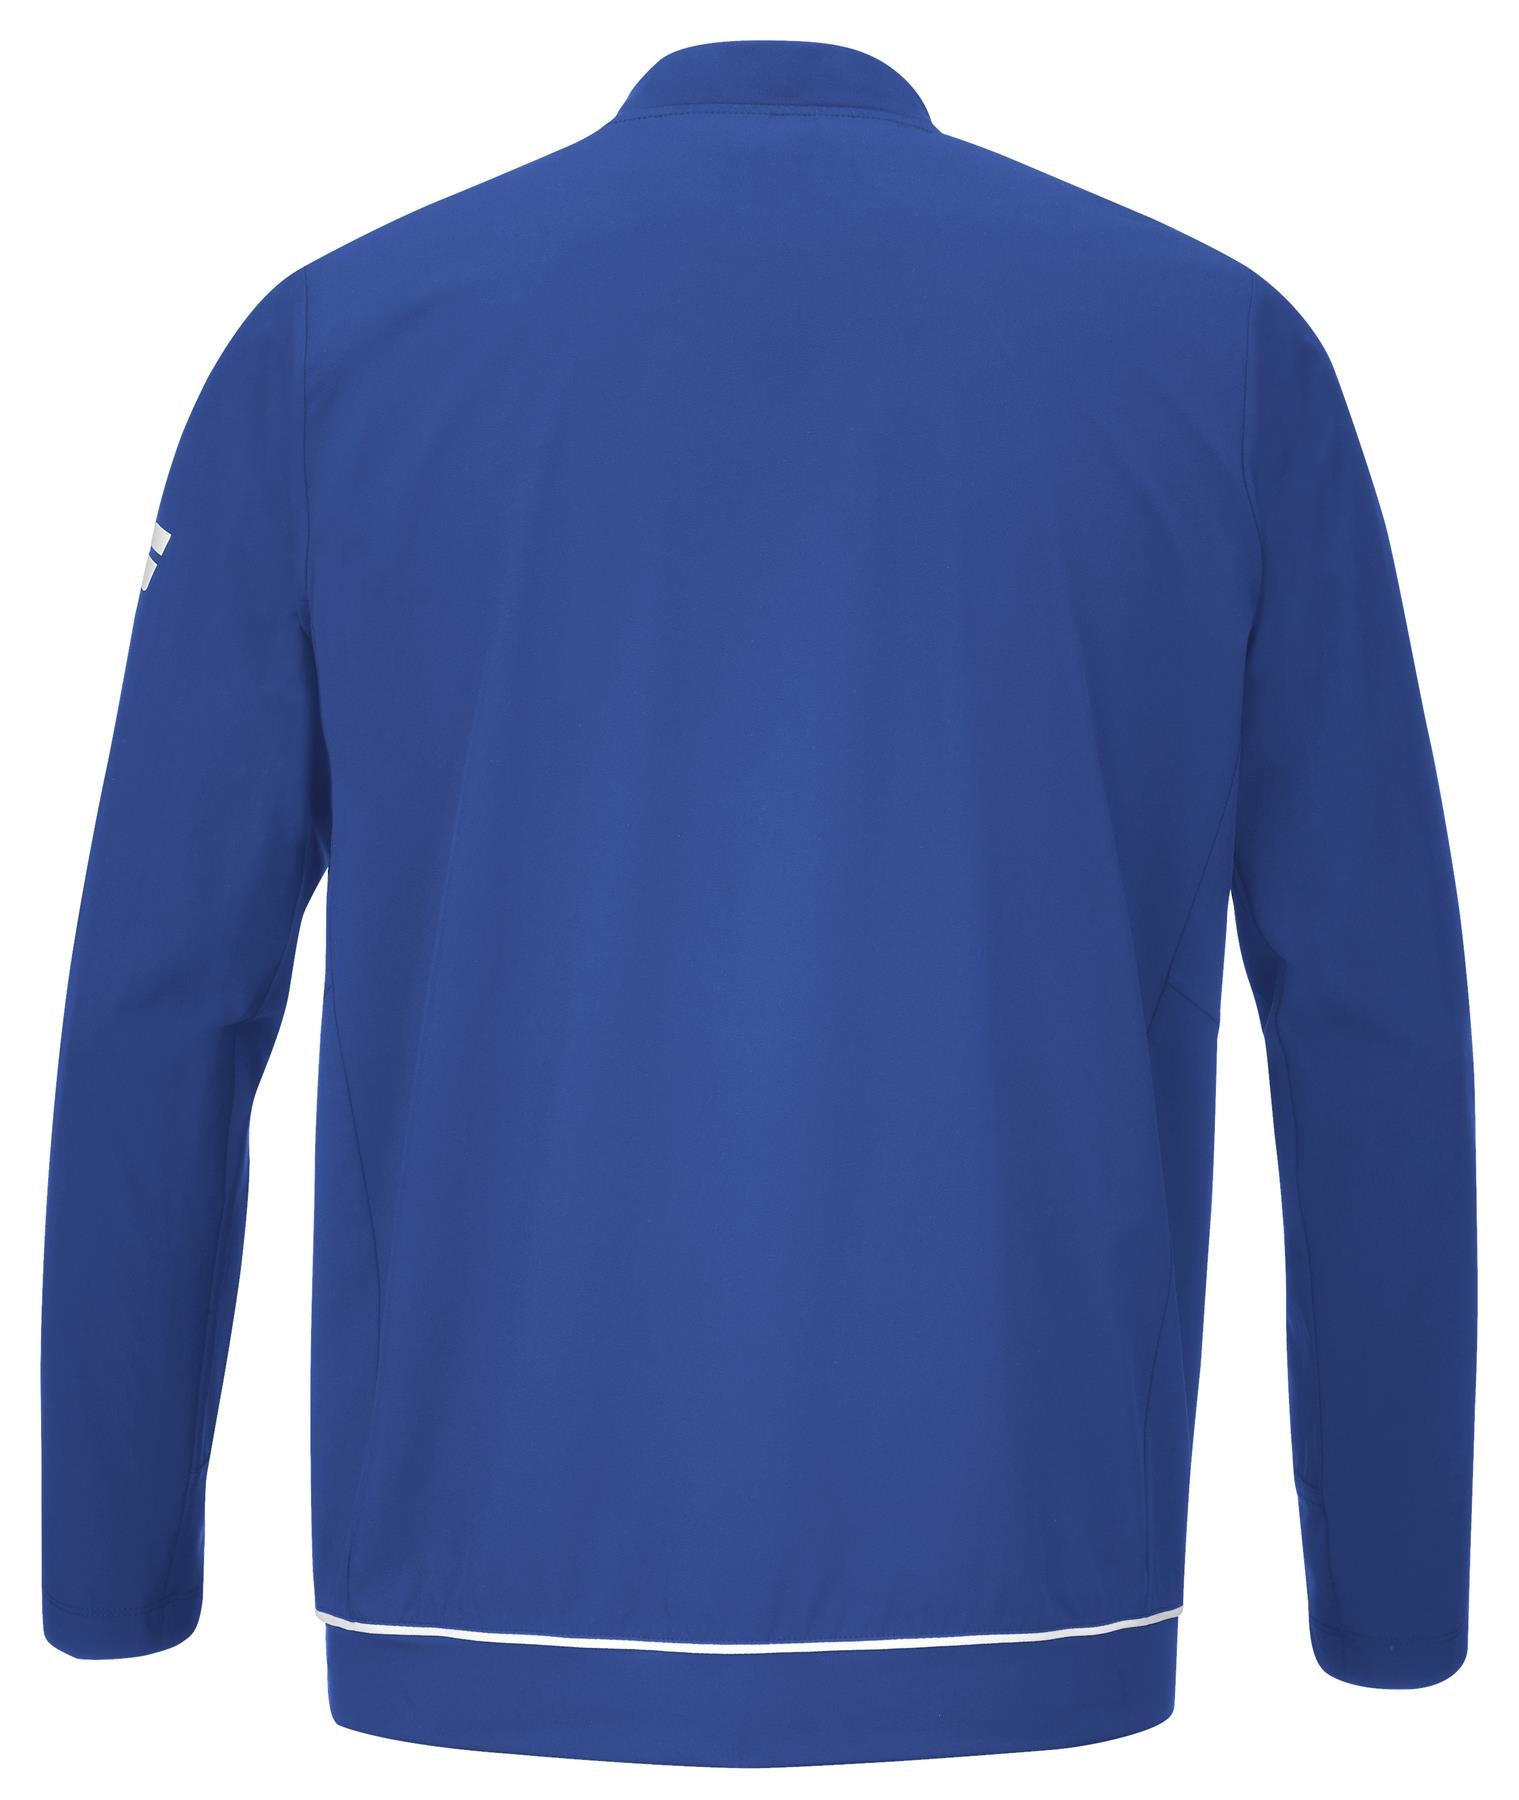 Babolat Play Mens Badminton Jacket - Sodalite Blue - Back